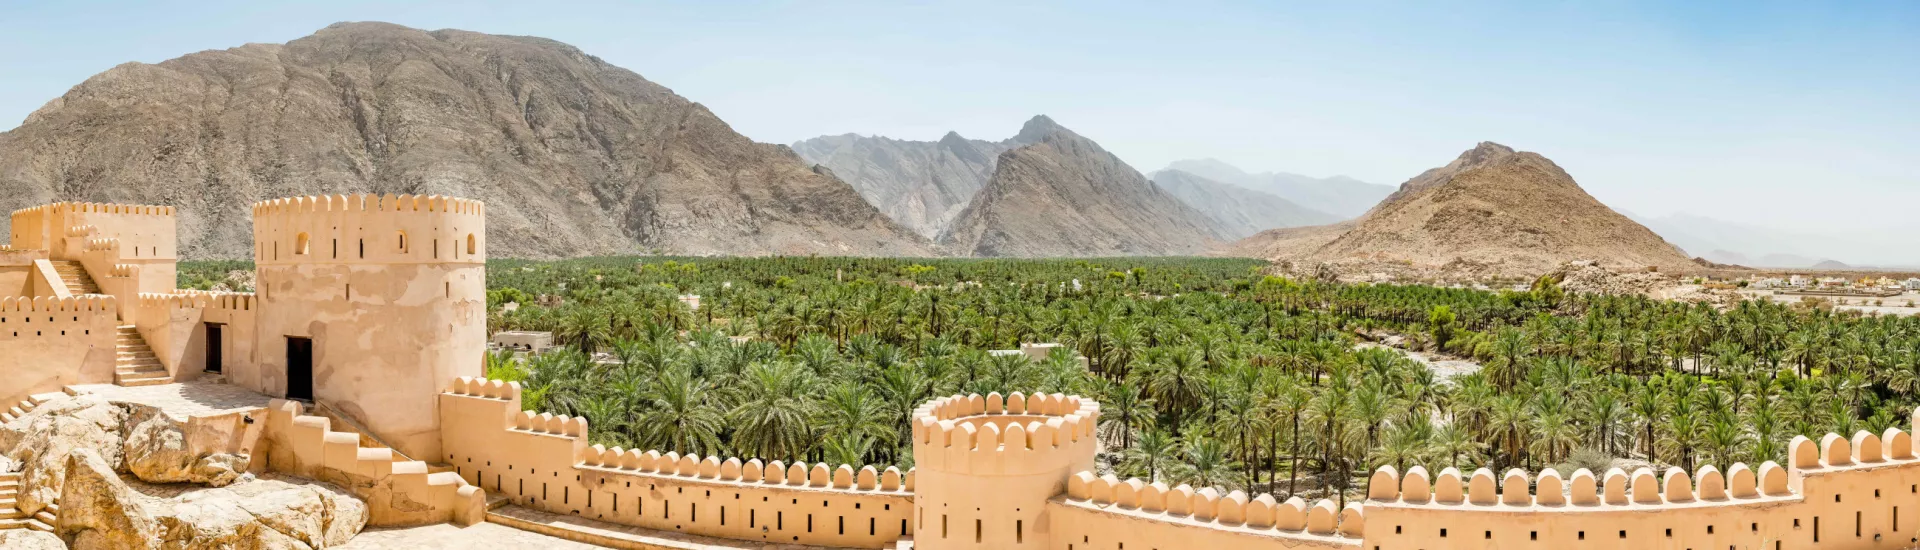 Nahal town in the Al-Batinah region of Oman